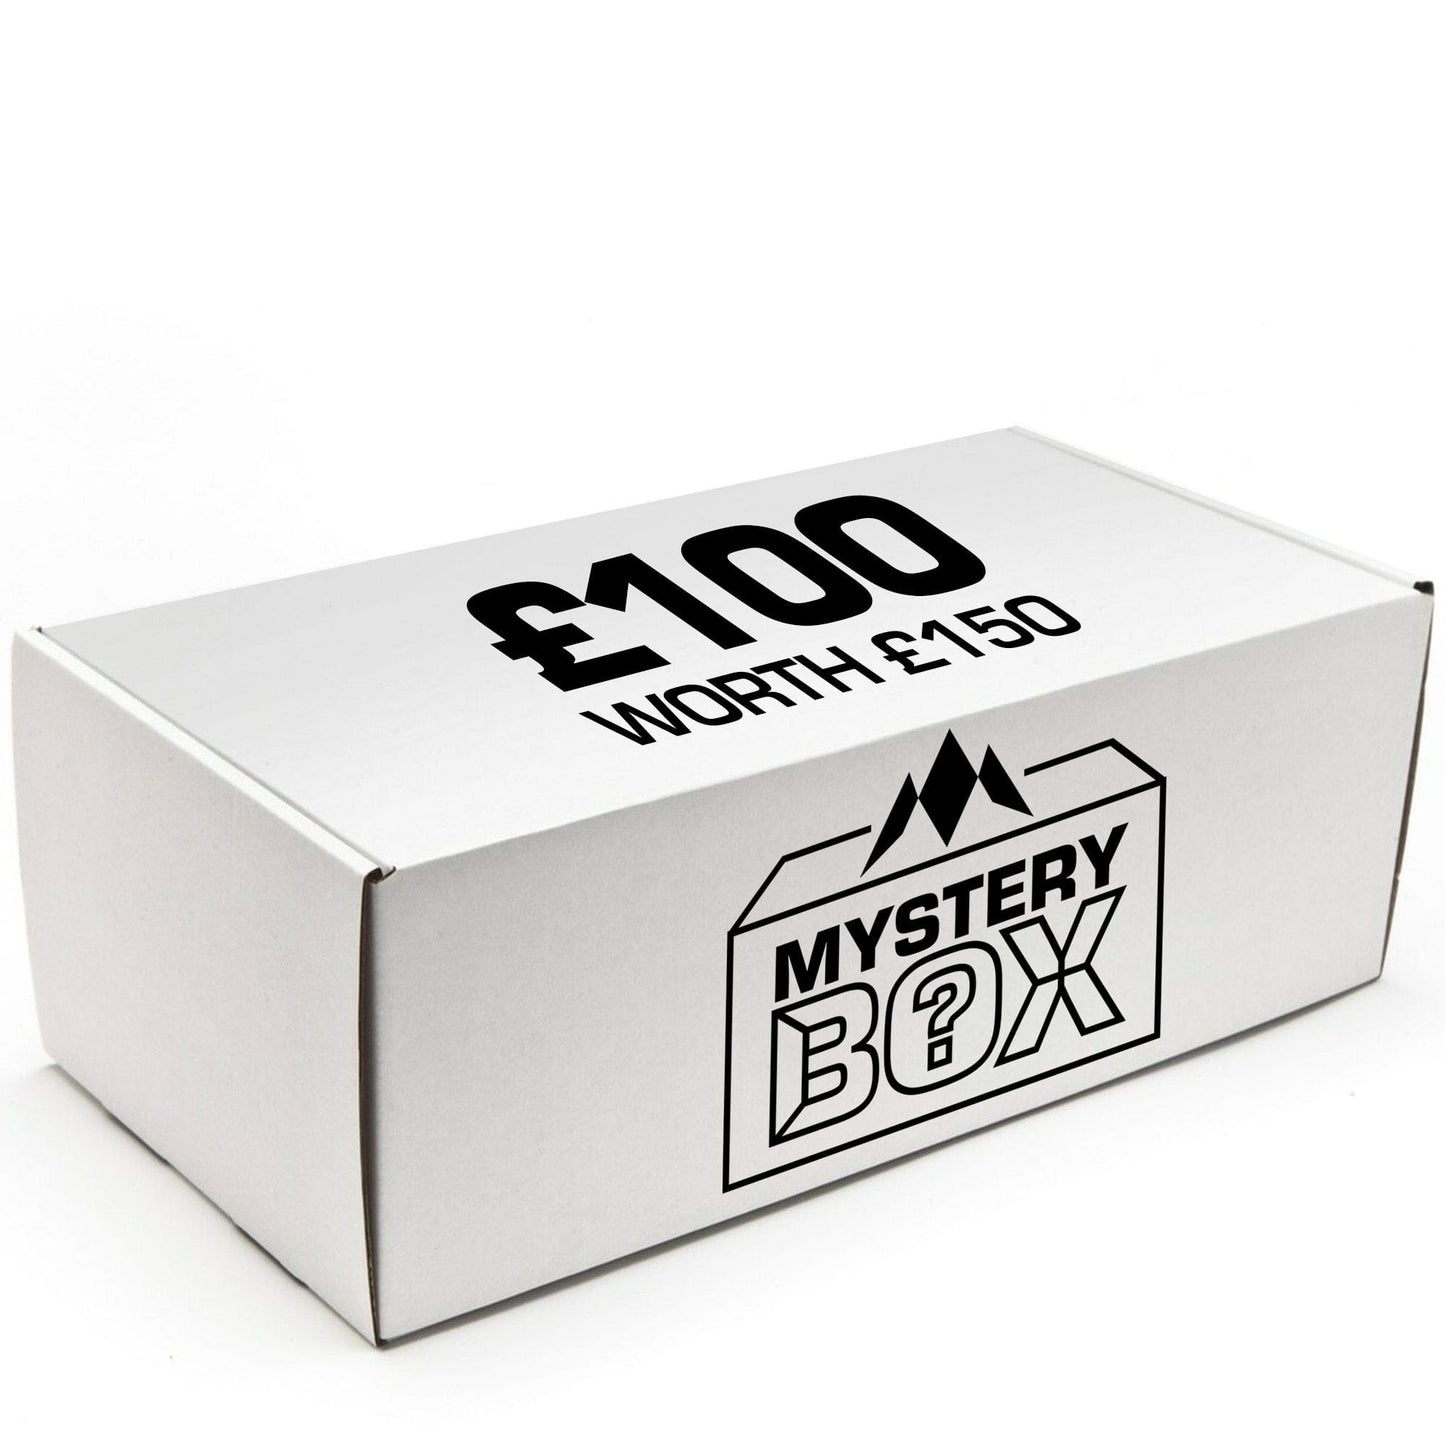 Mission Mystery Box - Steel Tip Darts & Accessories - Worth £150